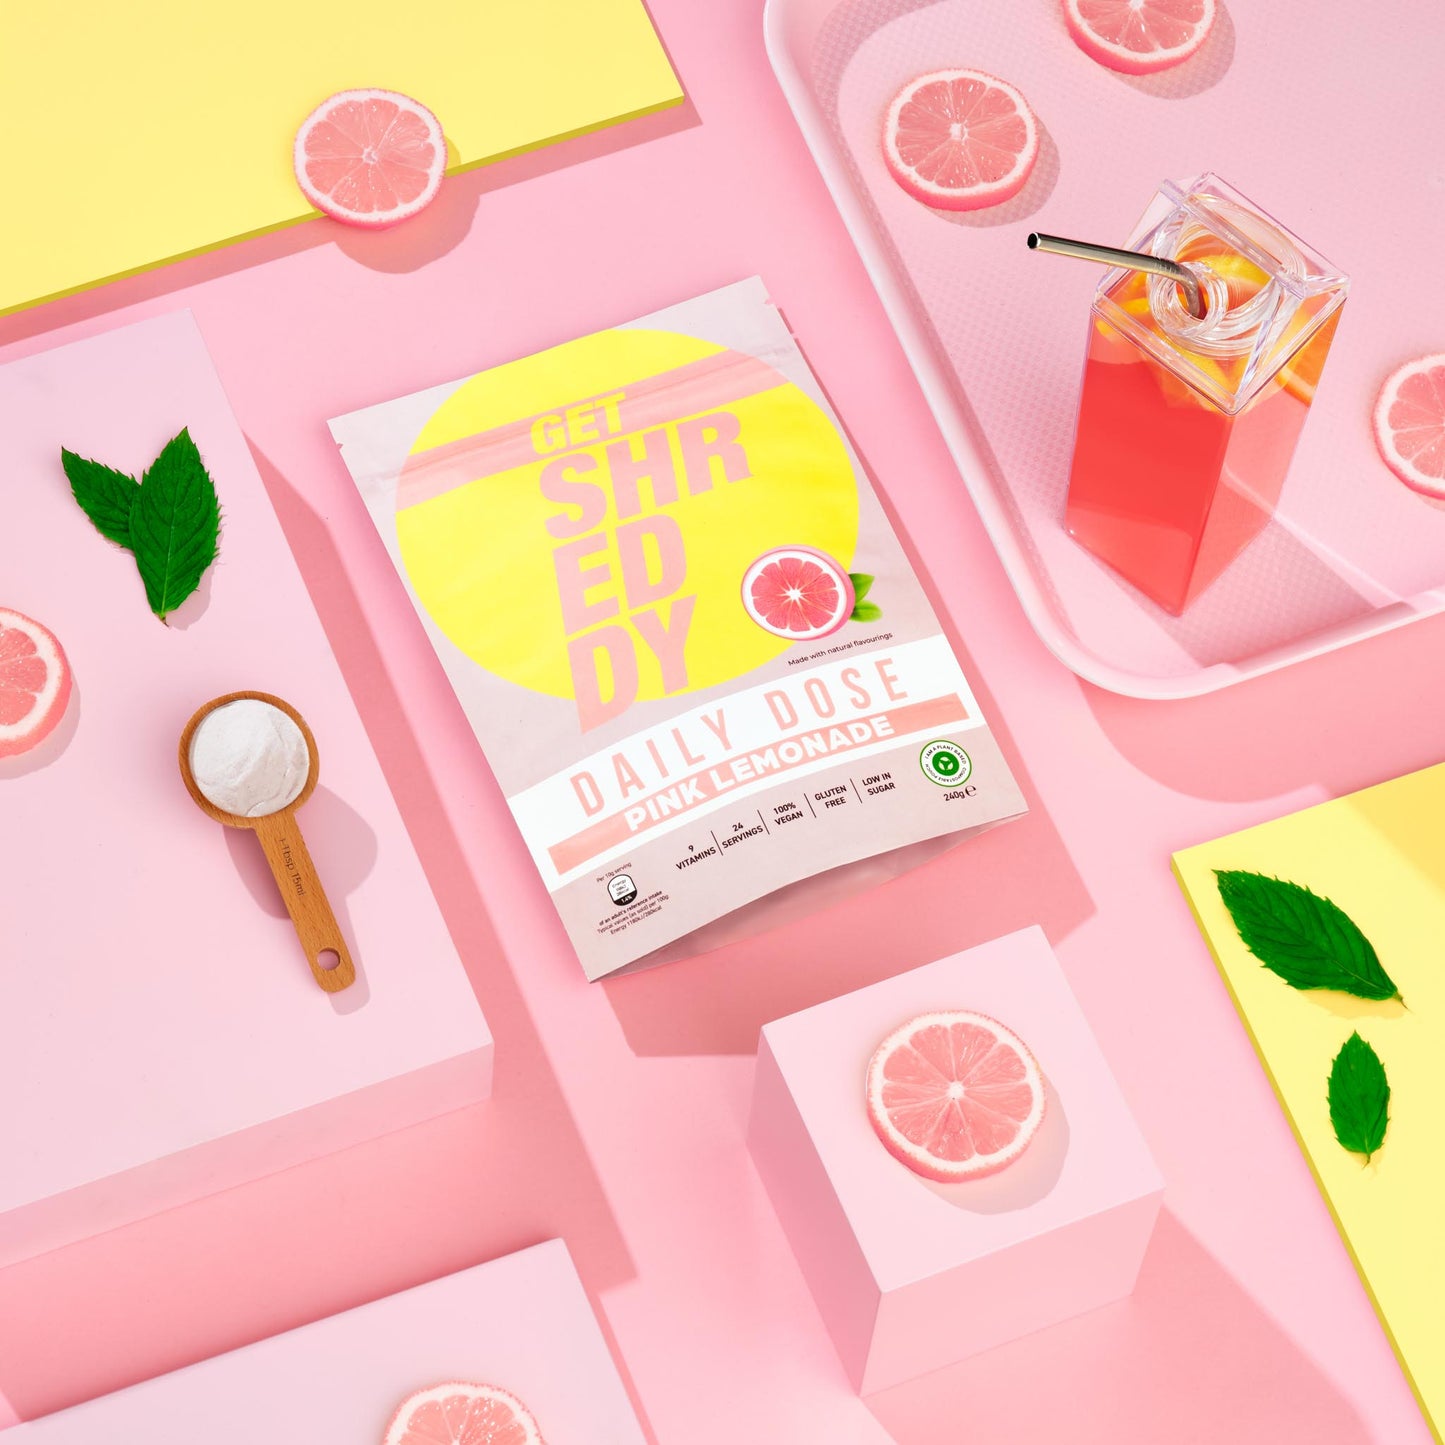 Pink Lemonade Daily Dose - 240g